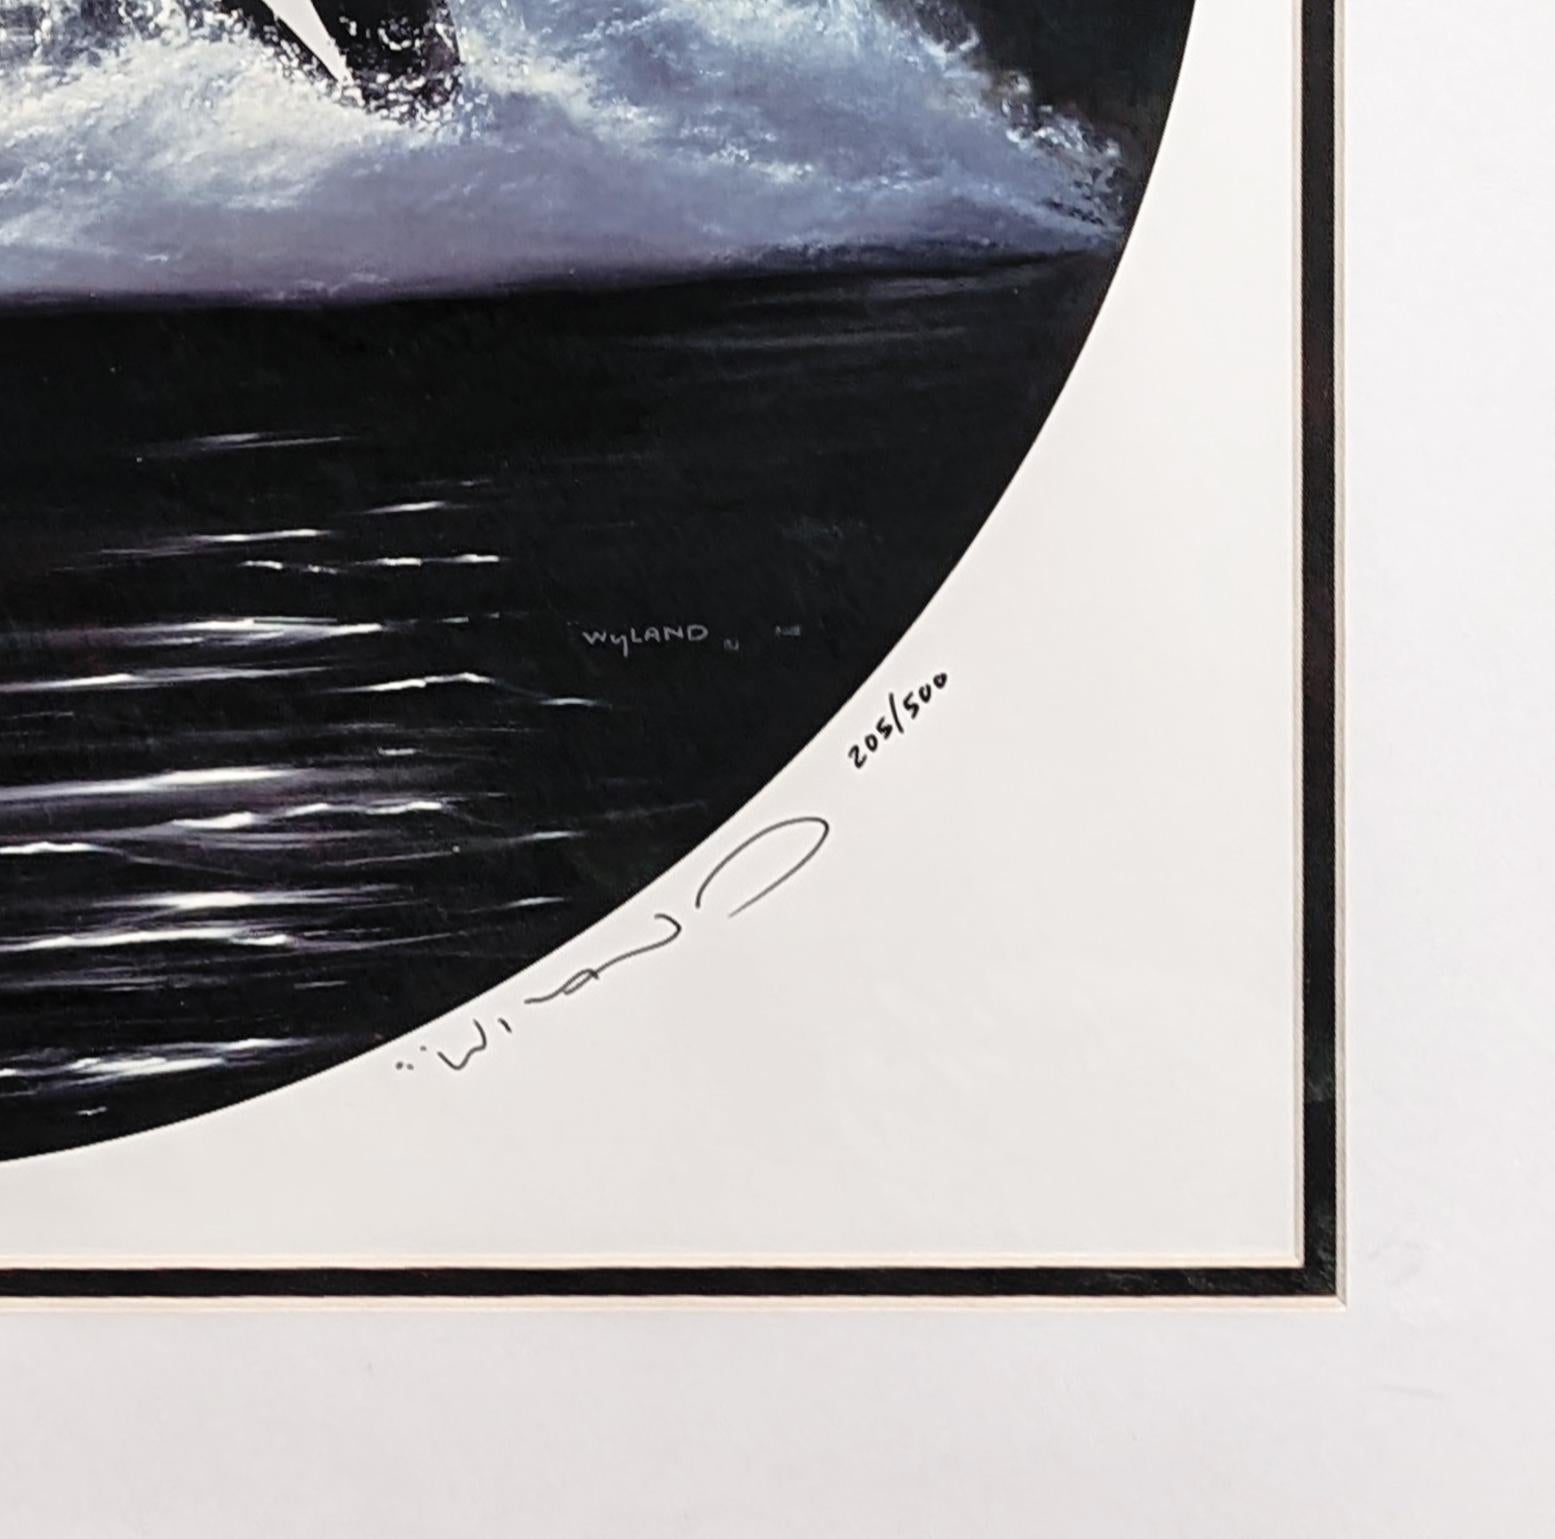 ORCA MOON - Print by Robert Wyland